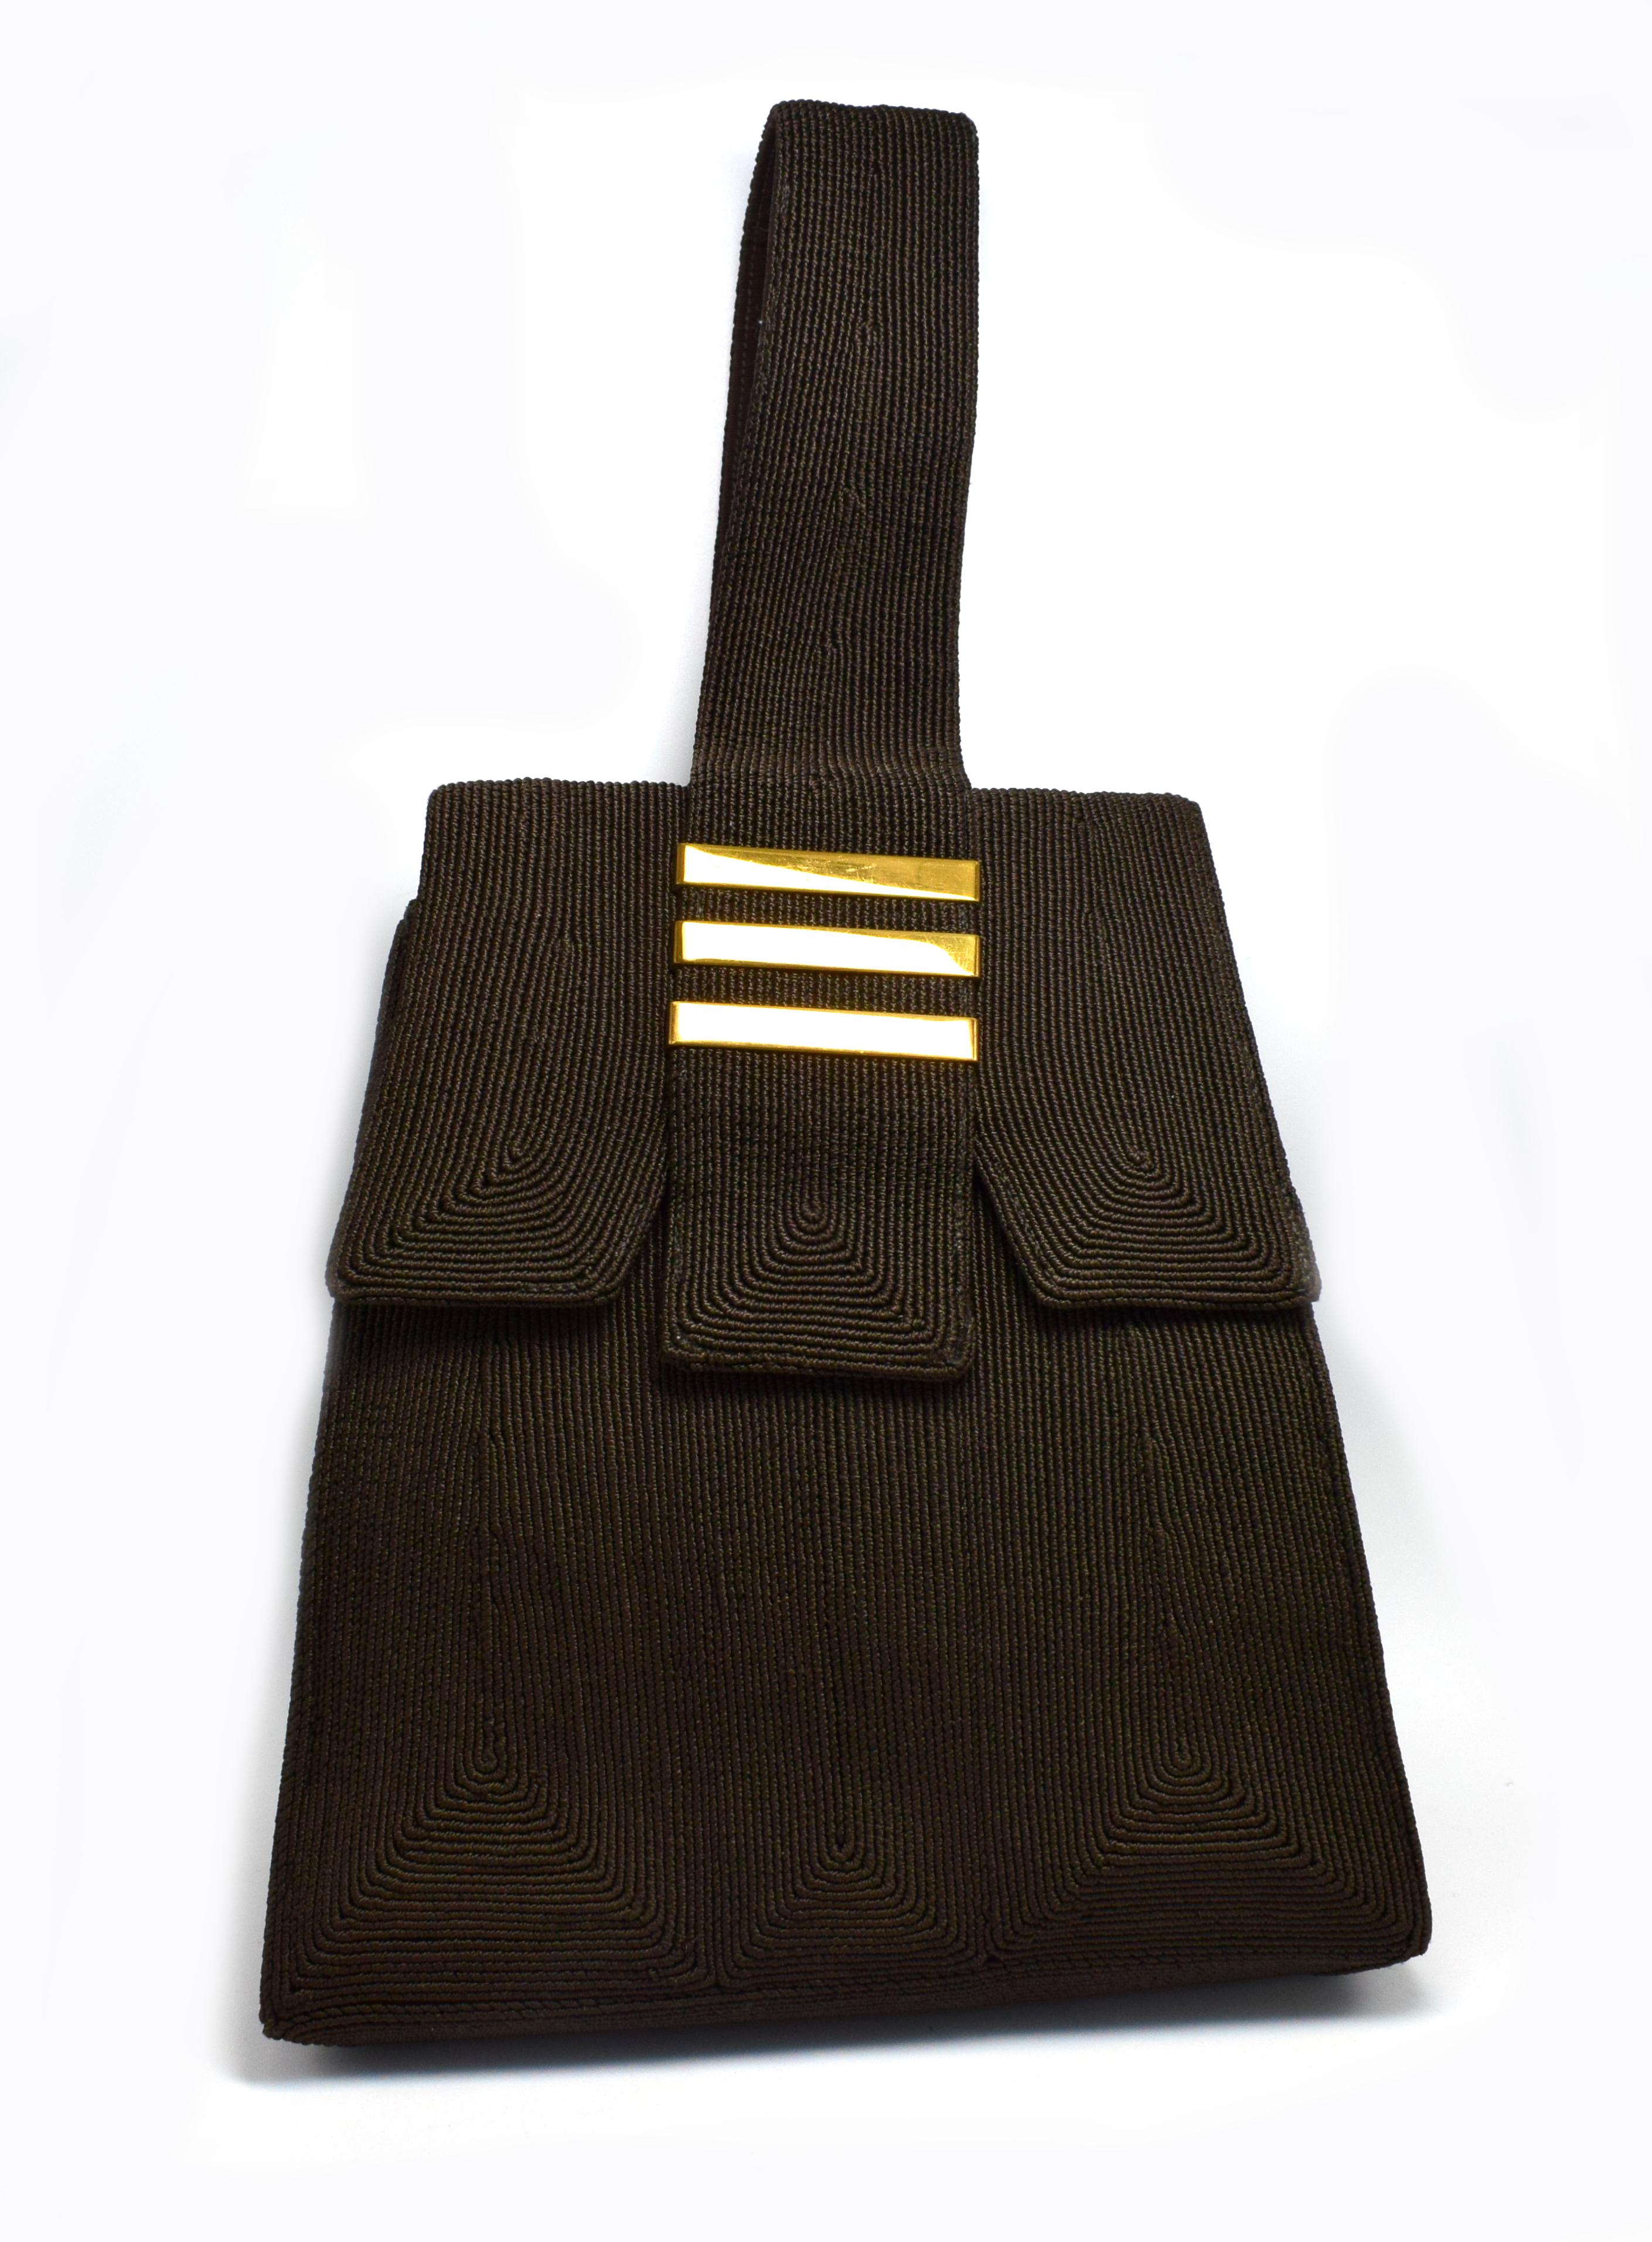 American Art Deco Brown Genuine Cord Ladies Handbag, 1930 For Sale